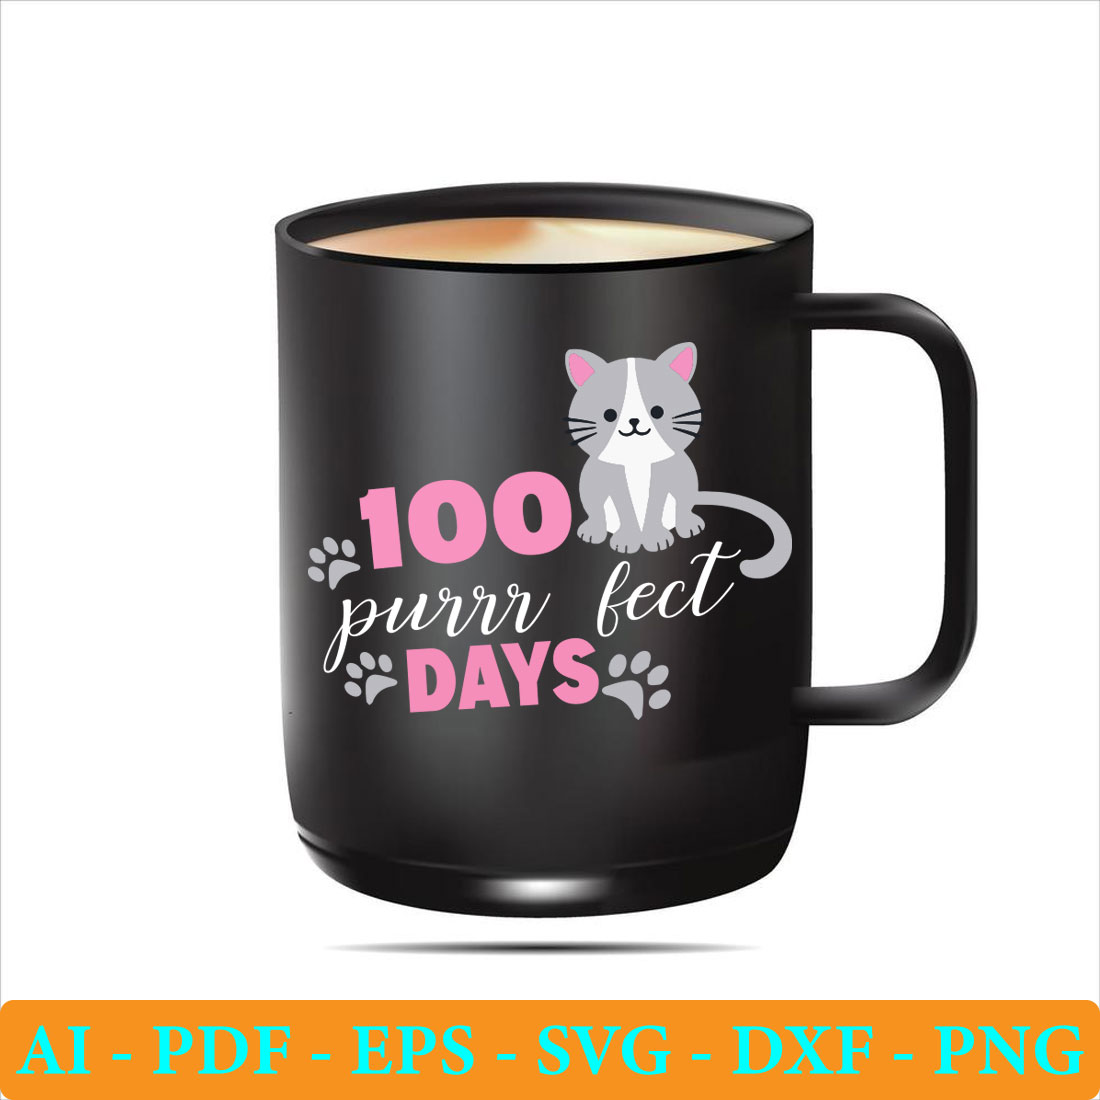 Black coffee mug with a cat on it.